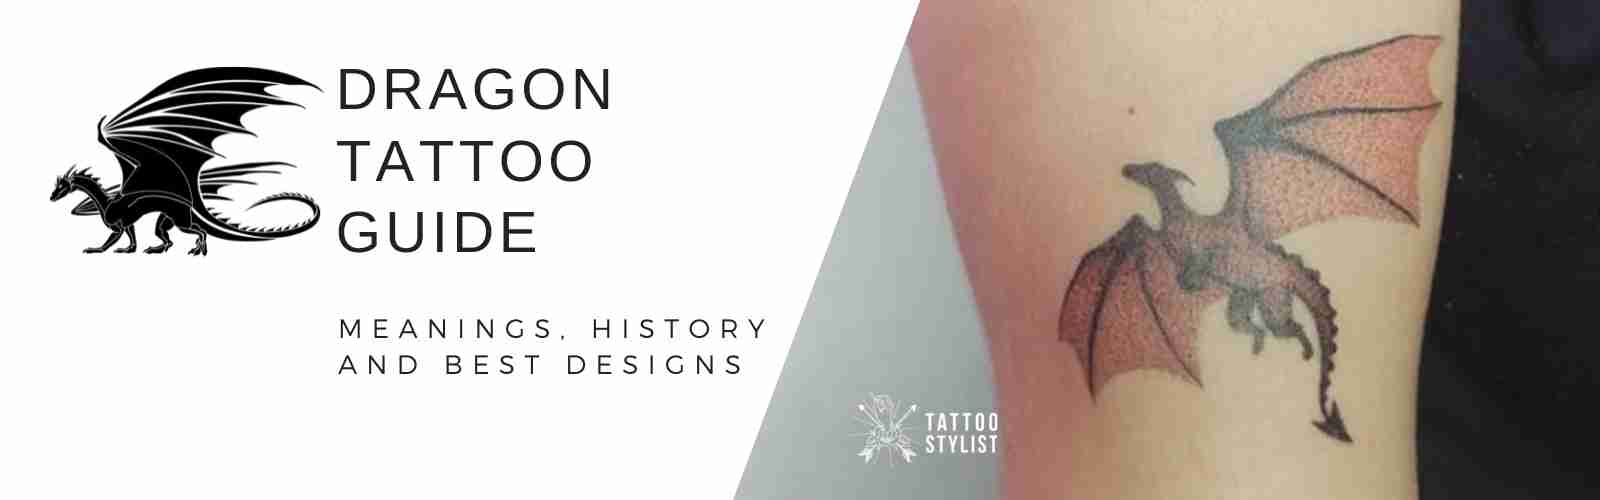 60 Tribal Dragon Tattoo Designs For Men  Mythological Ink Ideas